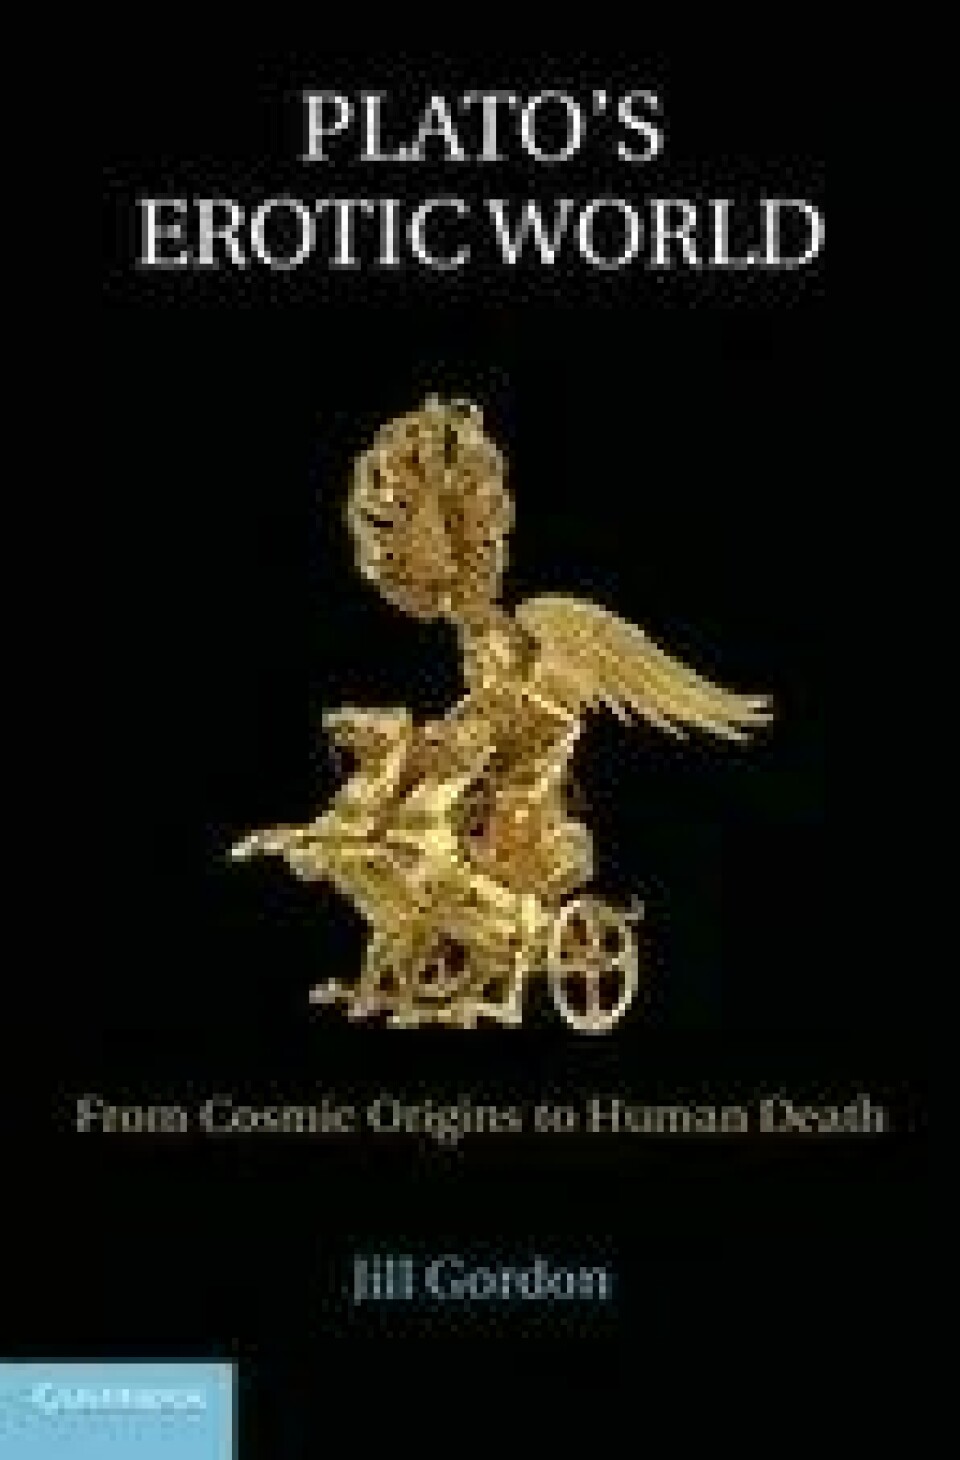 Bok: Plato’s Erotic World: From Cosmic Origins to Human Death – Jill Gordon